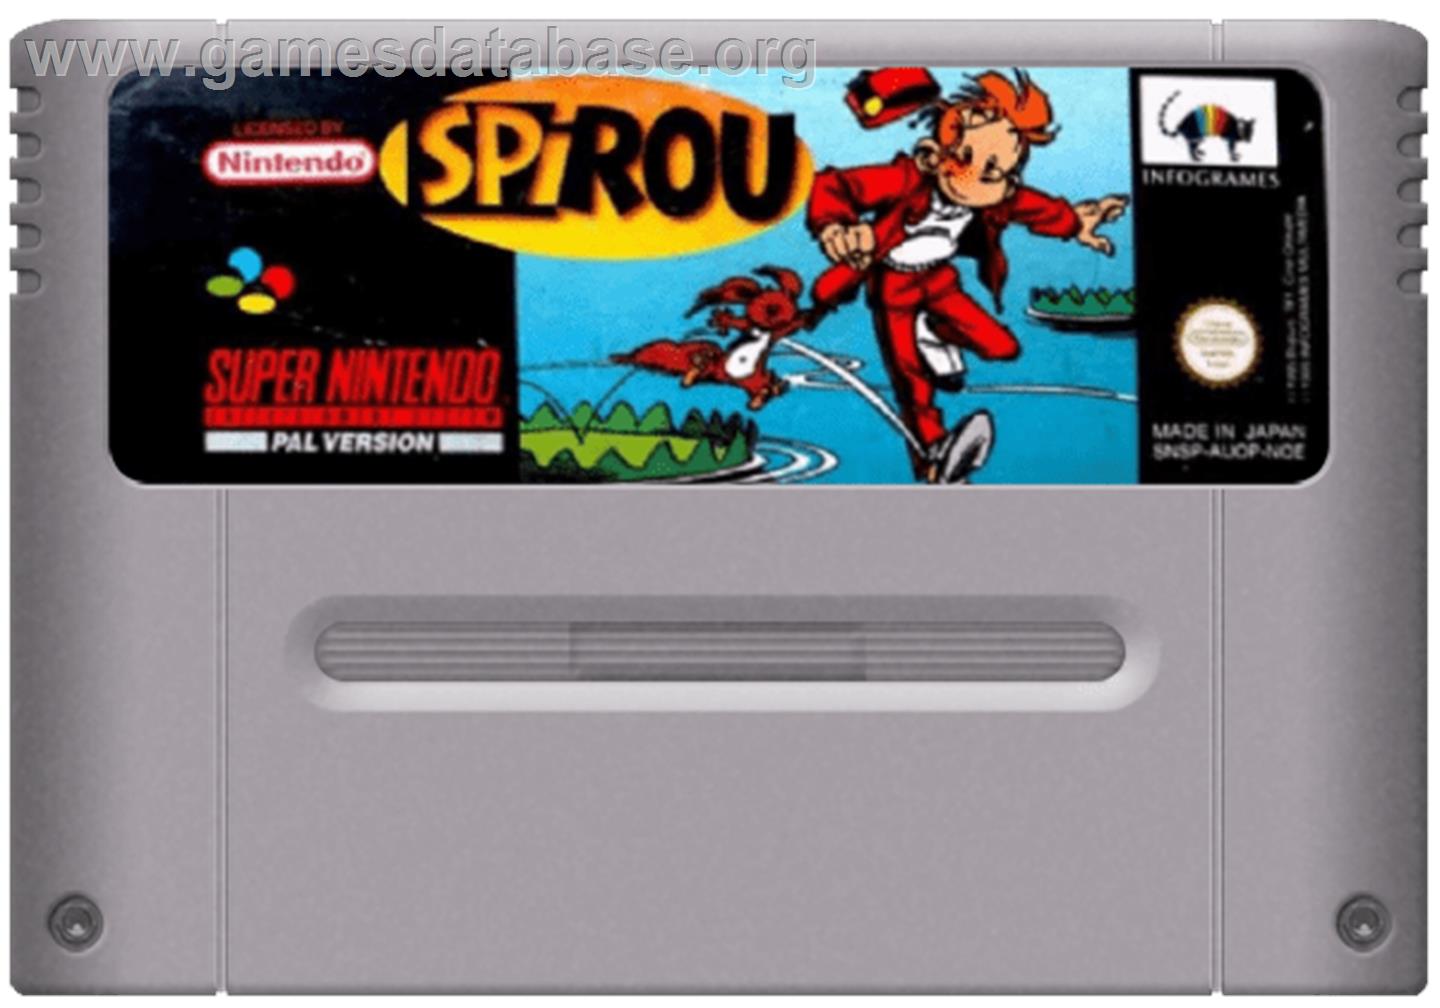 Spirou - Nintendo SNES - Artwork - Cartridge